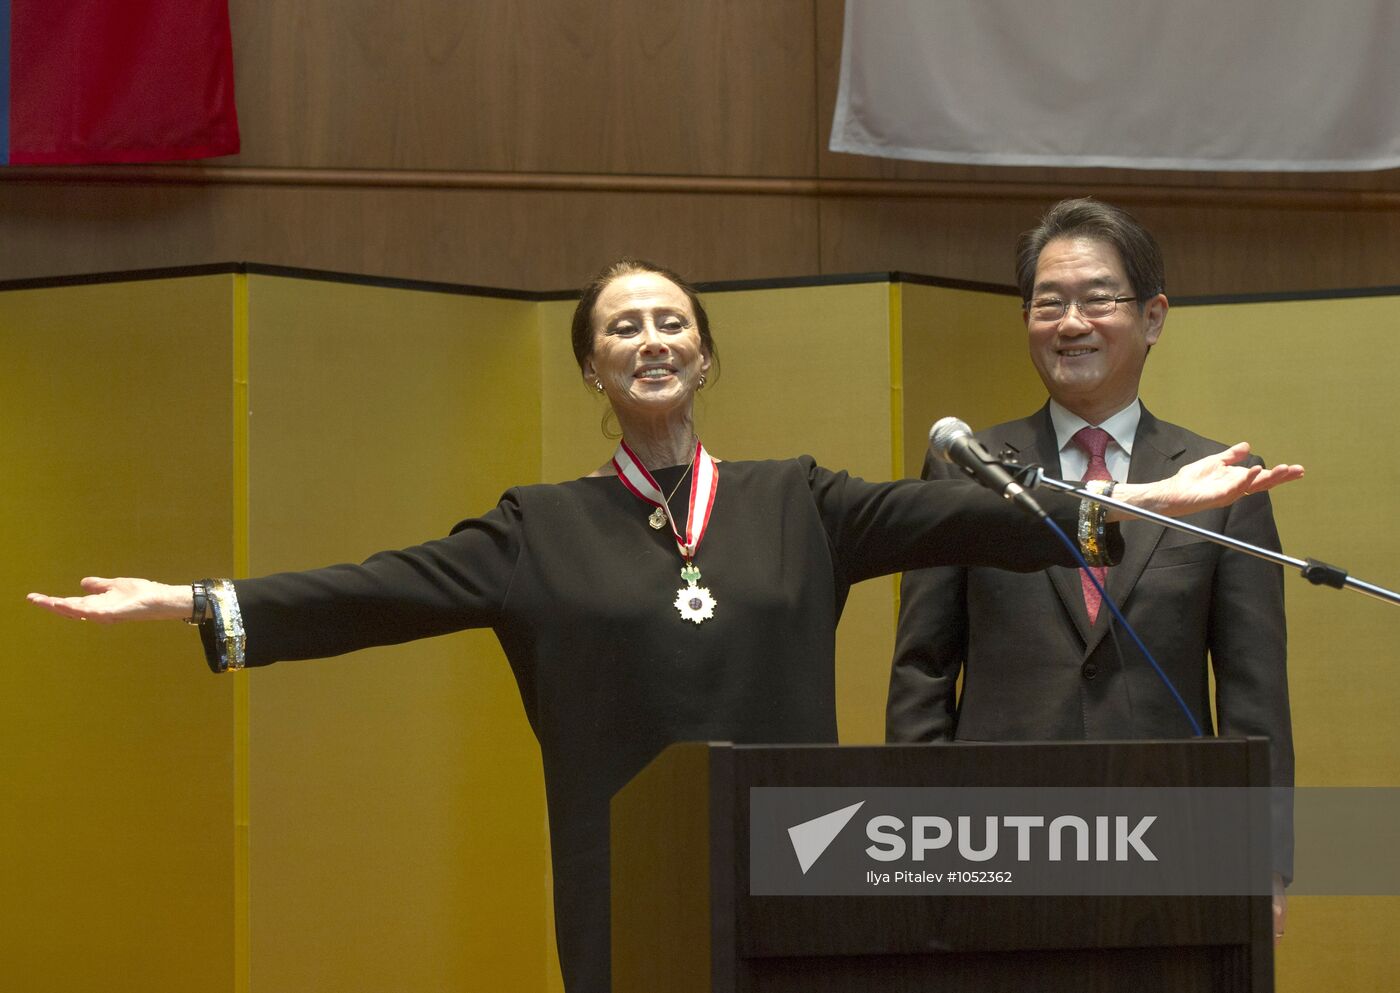 M. Plisetskaya and Y. Solomin honored with Orders of Rising Sun